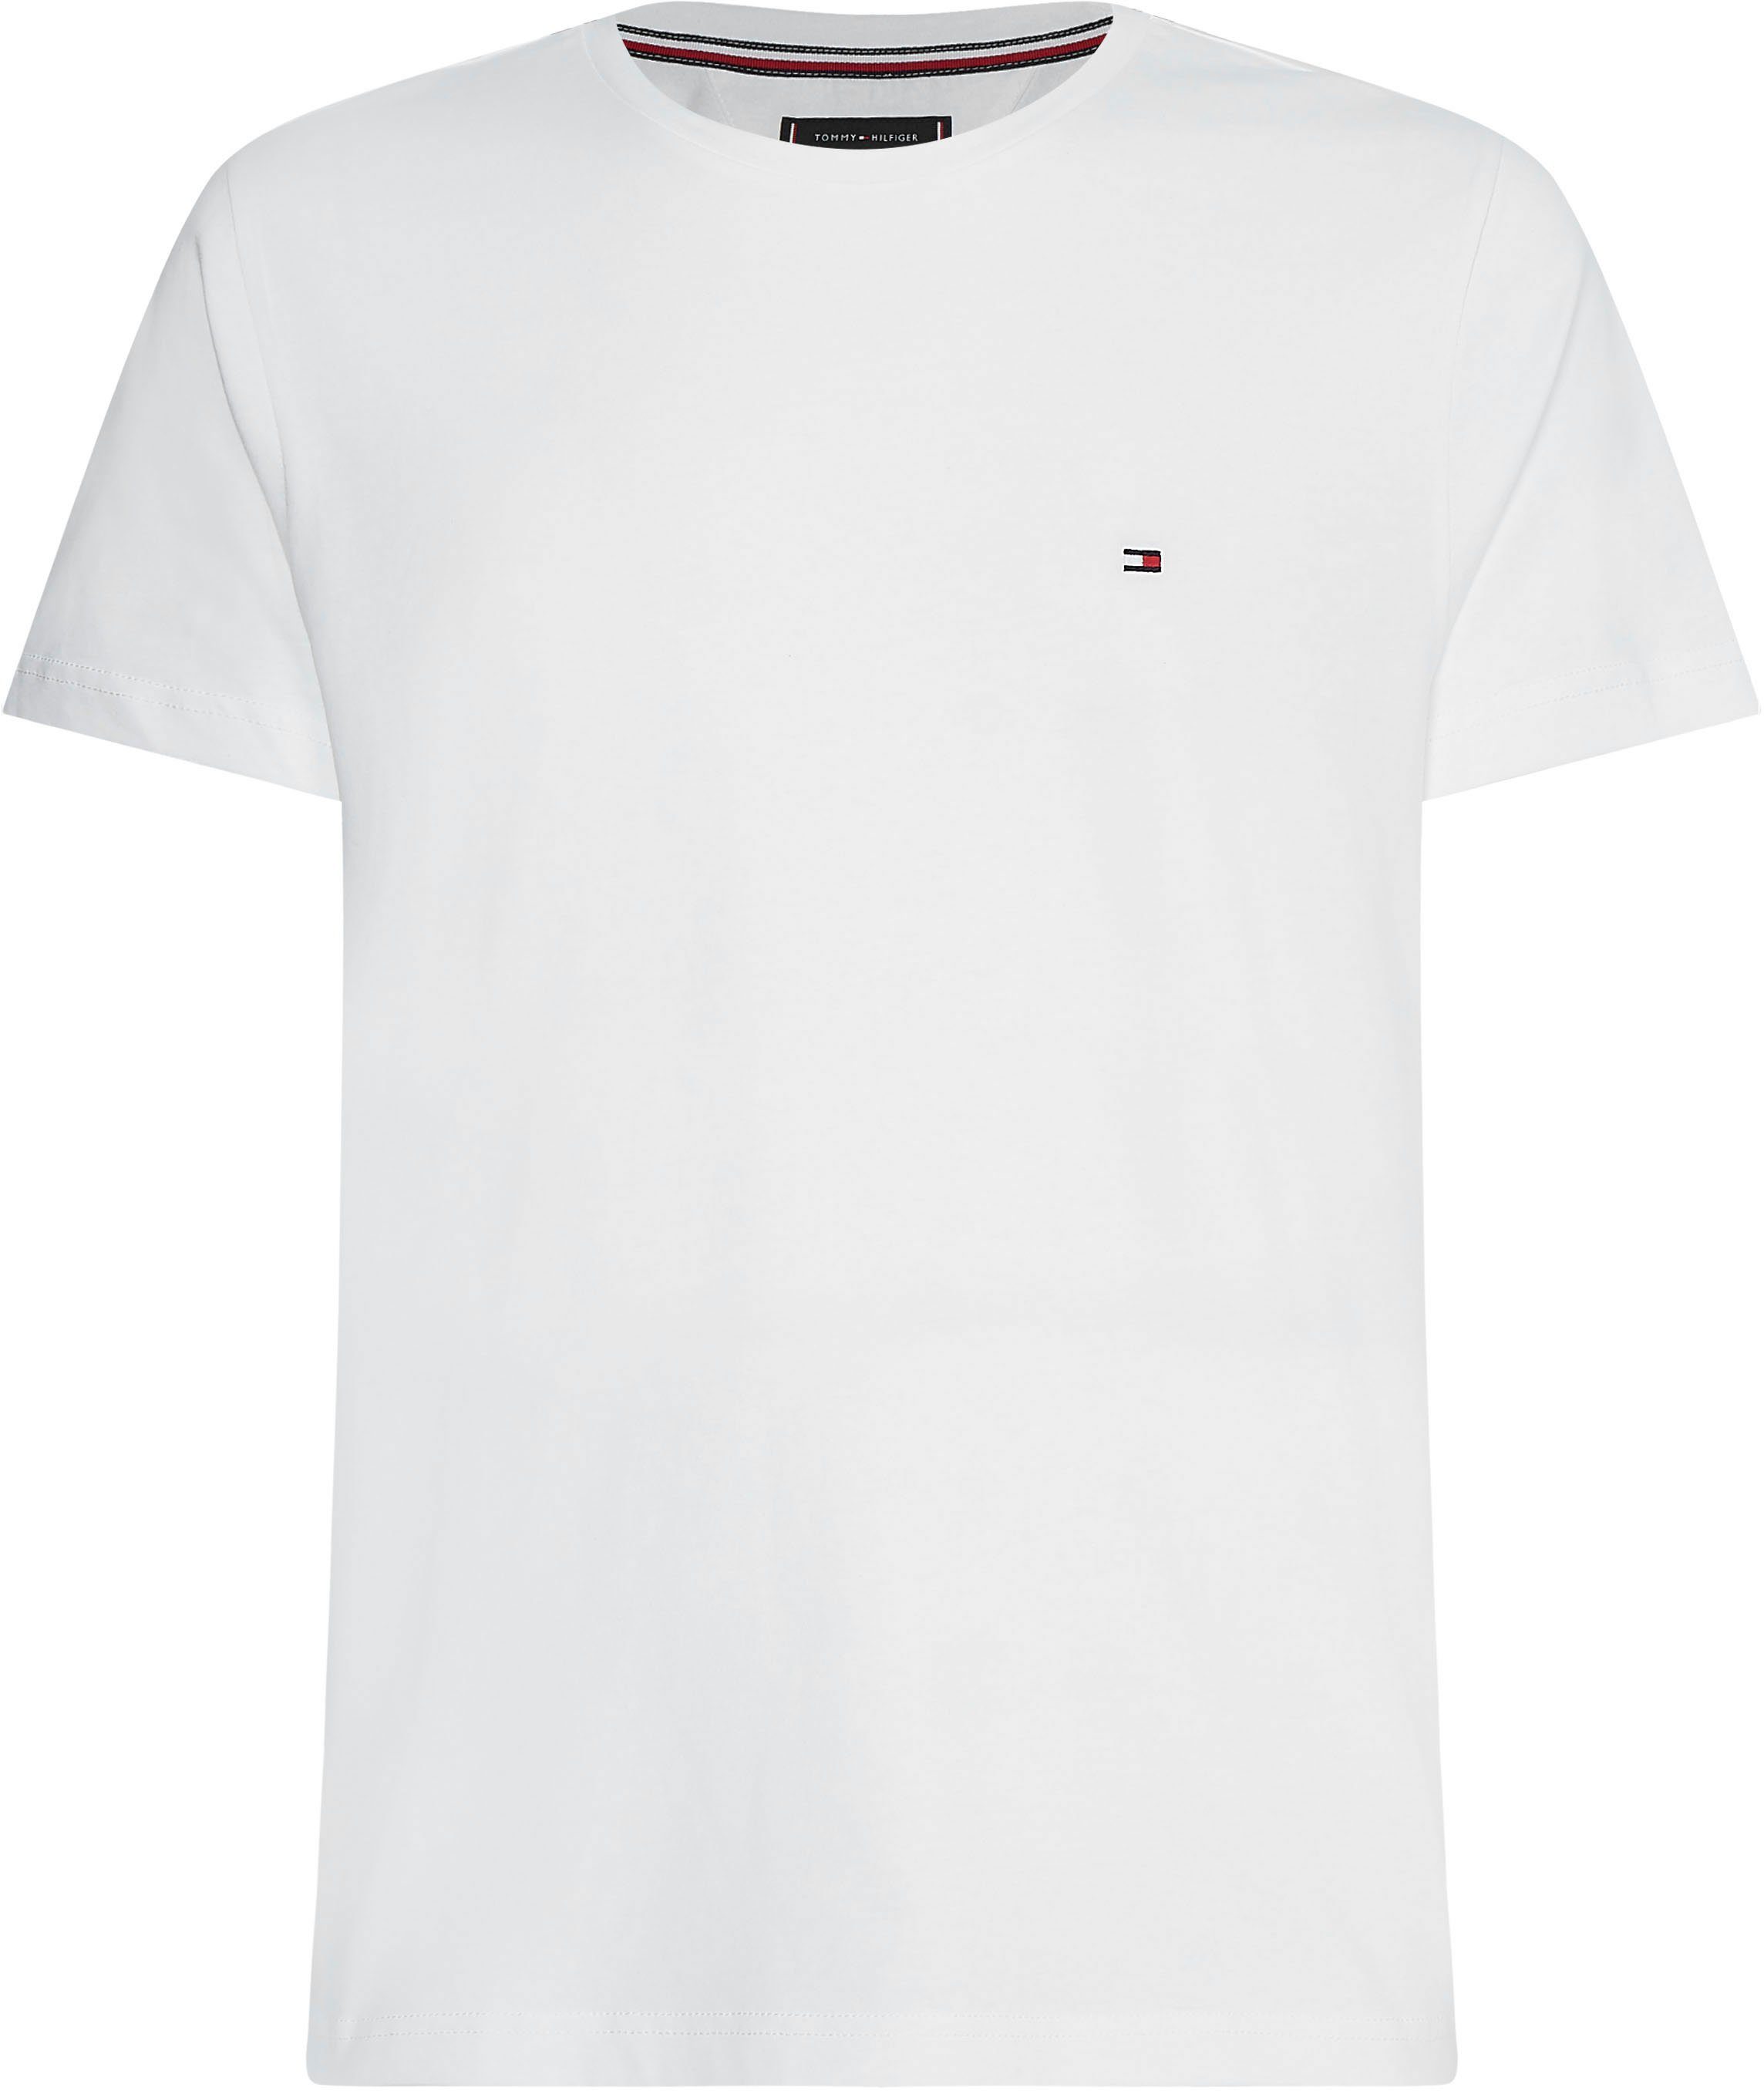 Tommy Hilfiger T-Shirt »TOMMY HILFIGER BACK LOGO TEE« online kaufen | OTTO